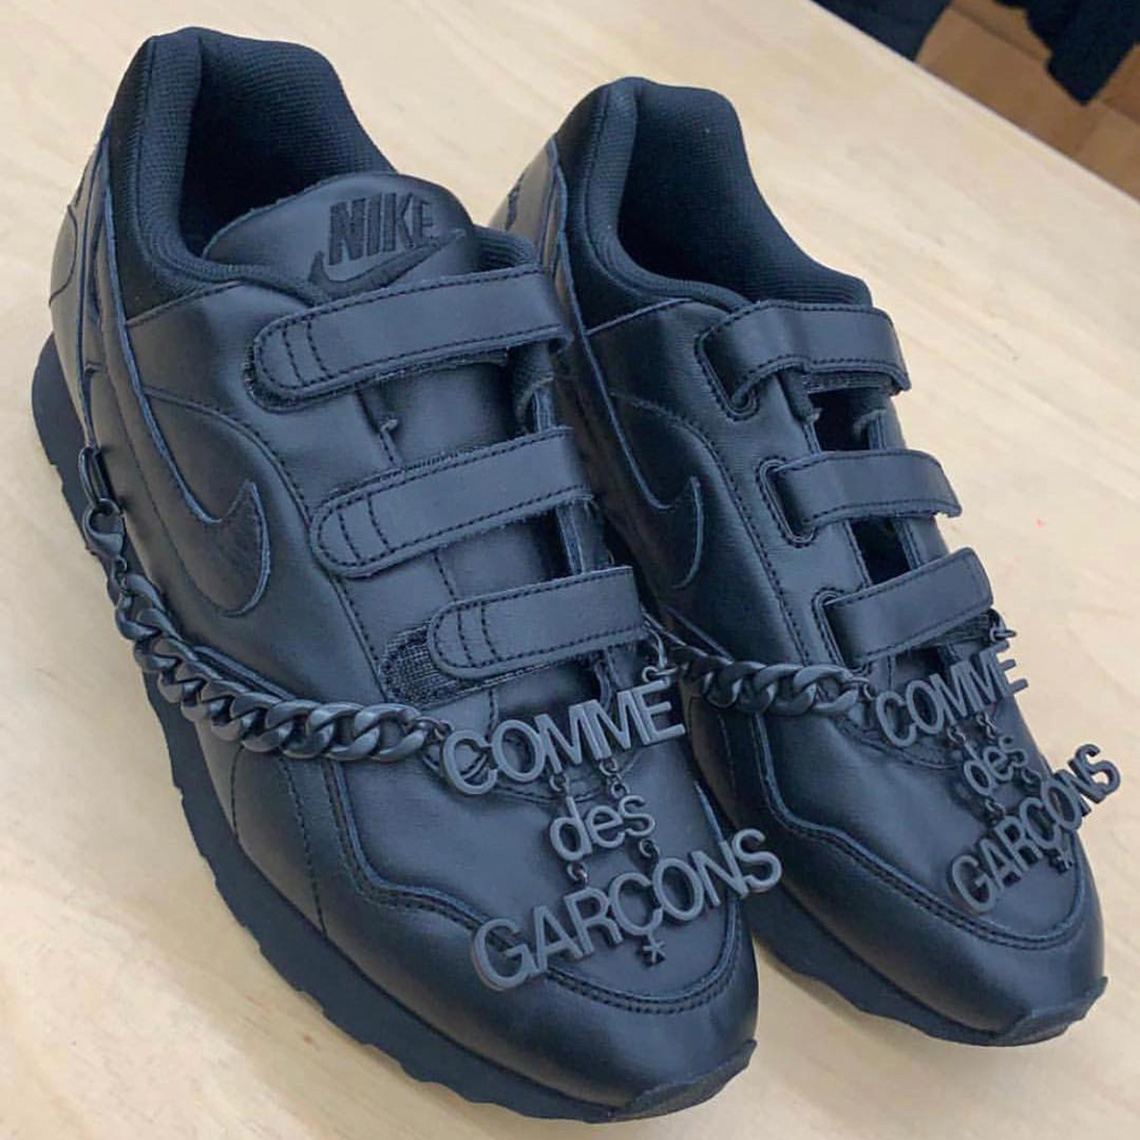 Commedesgarcons Nike Velcro Black 2